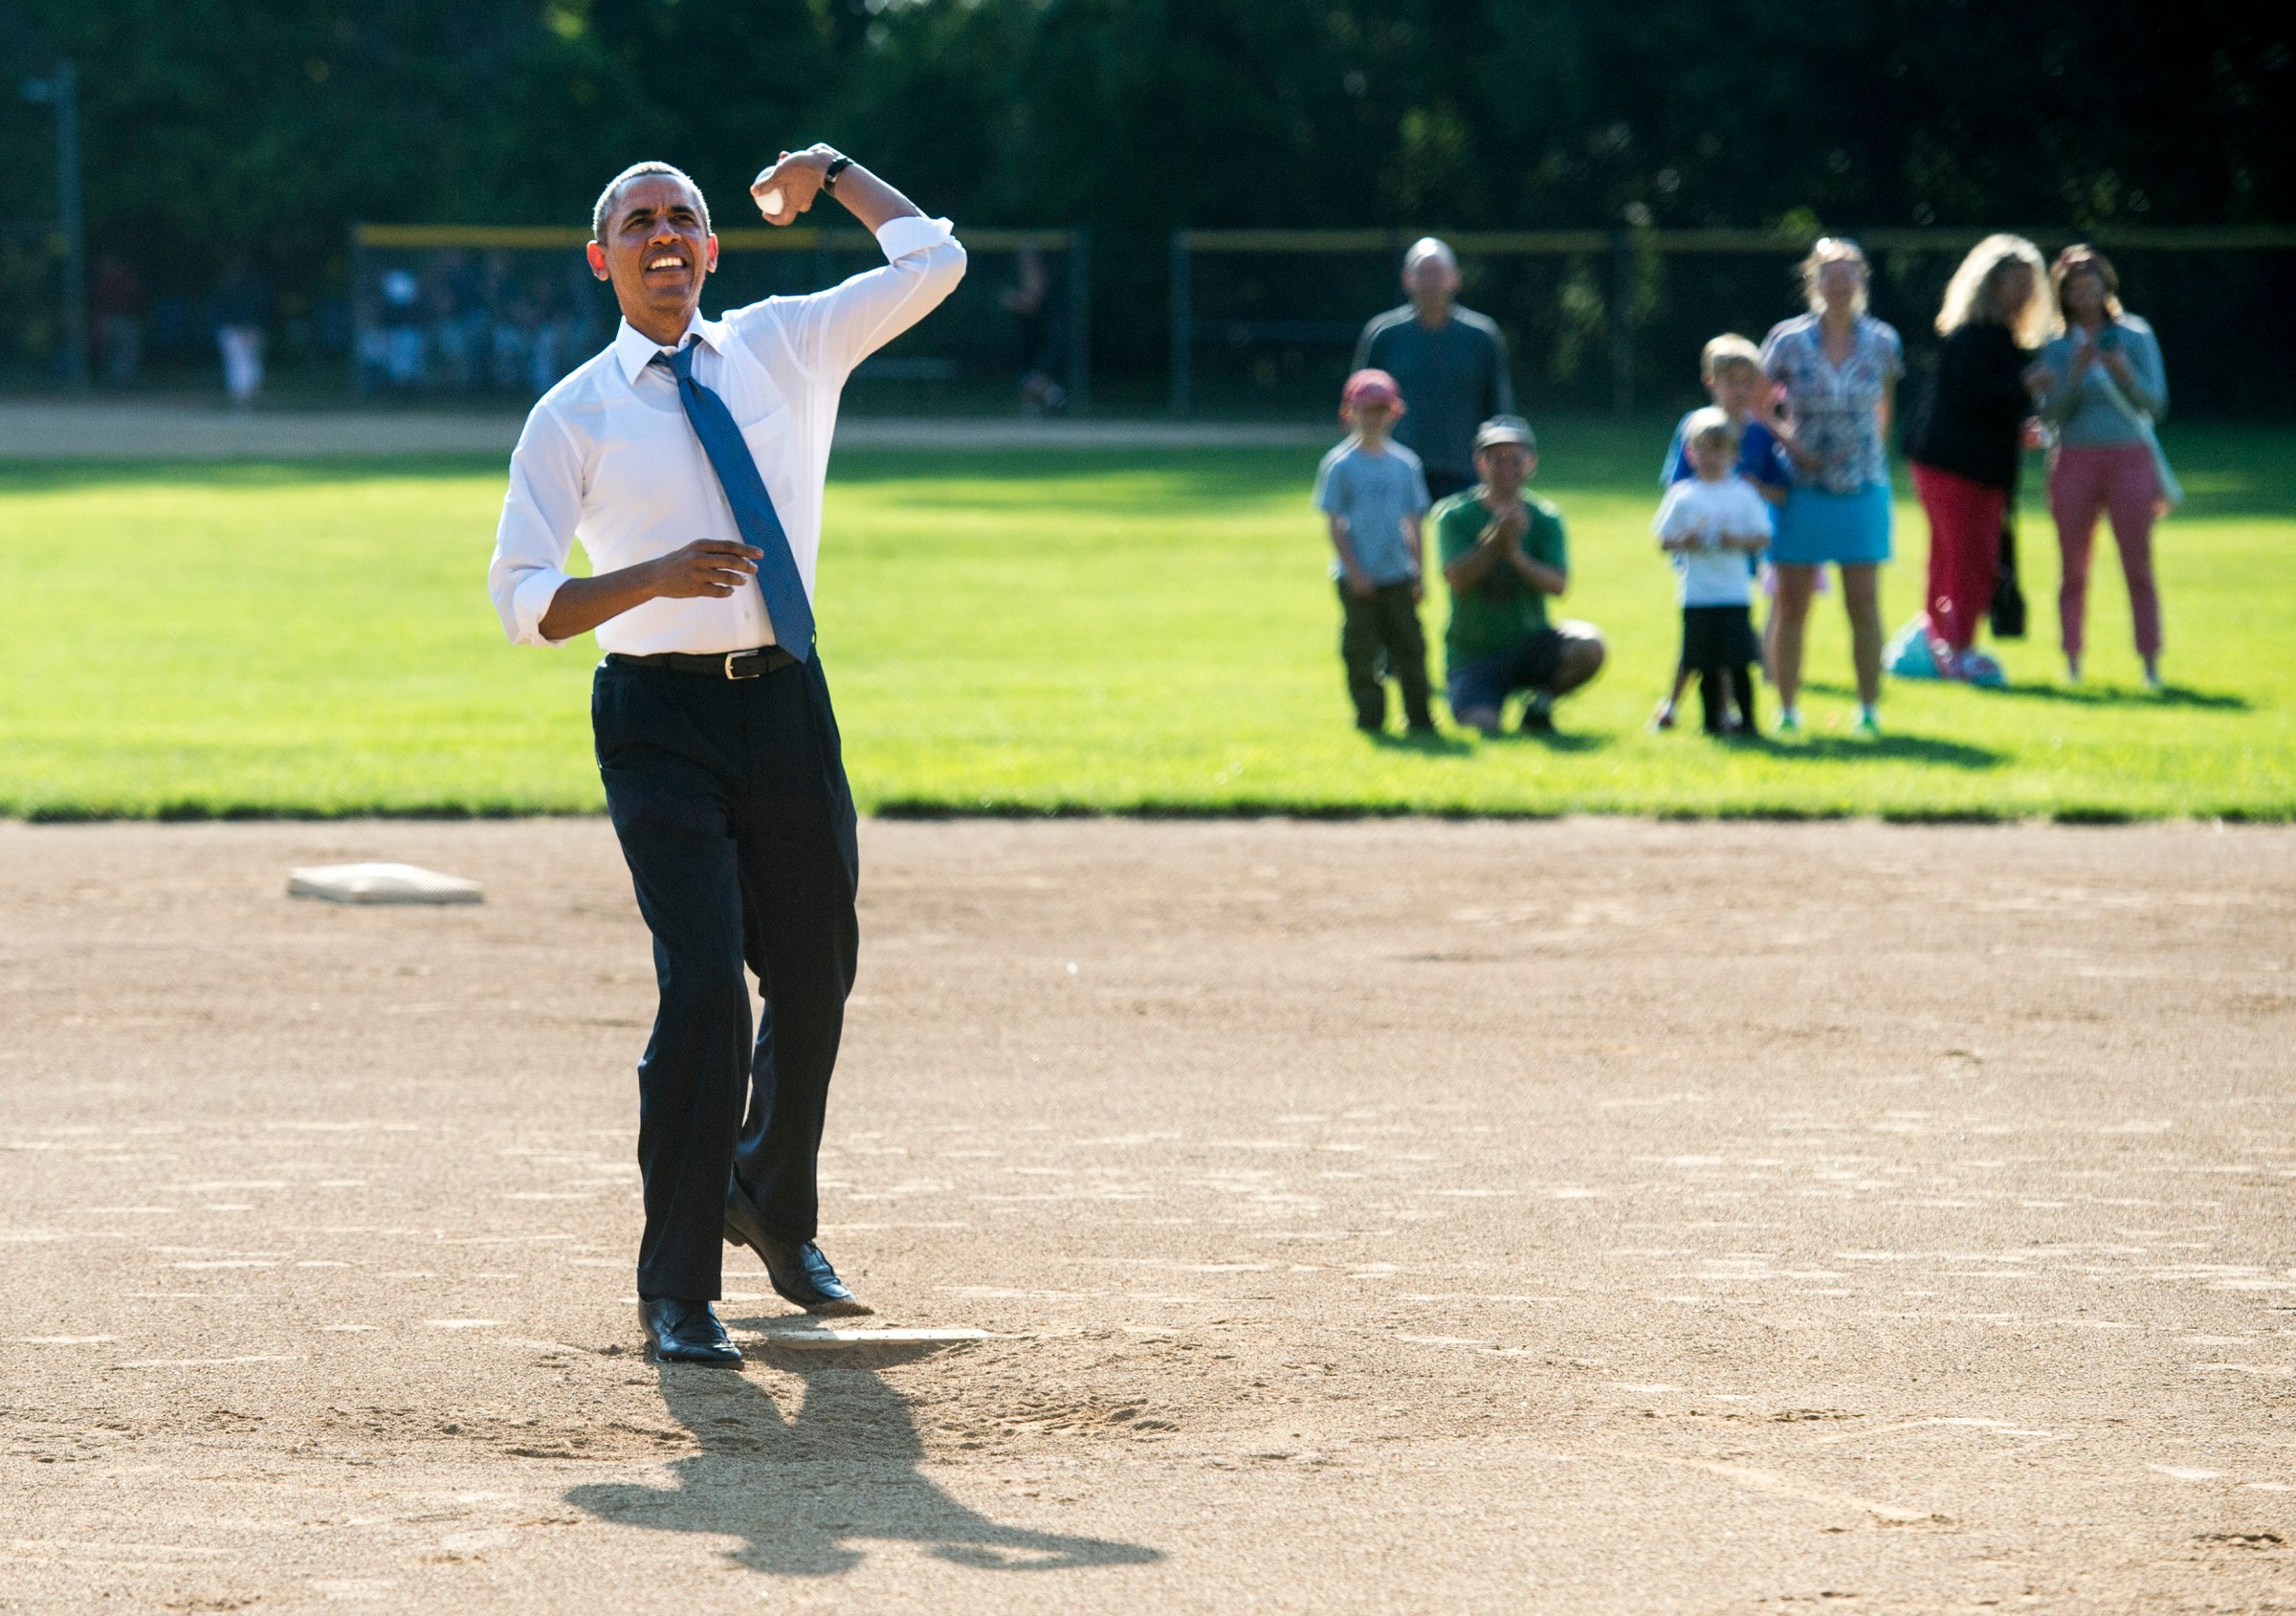 President Barack Obama Visits a Little Leage Baseball Game in Washington, D.C.